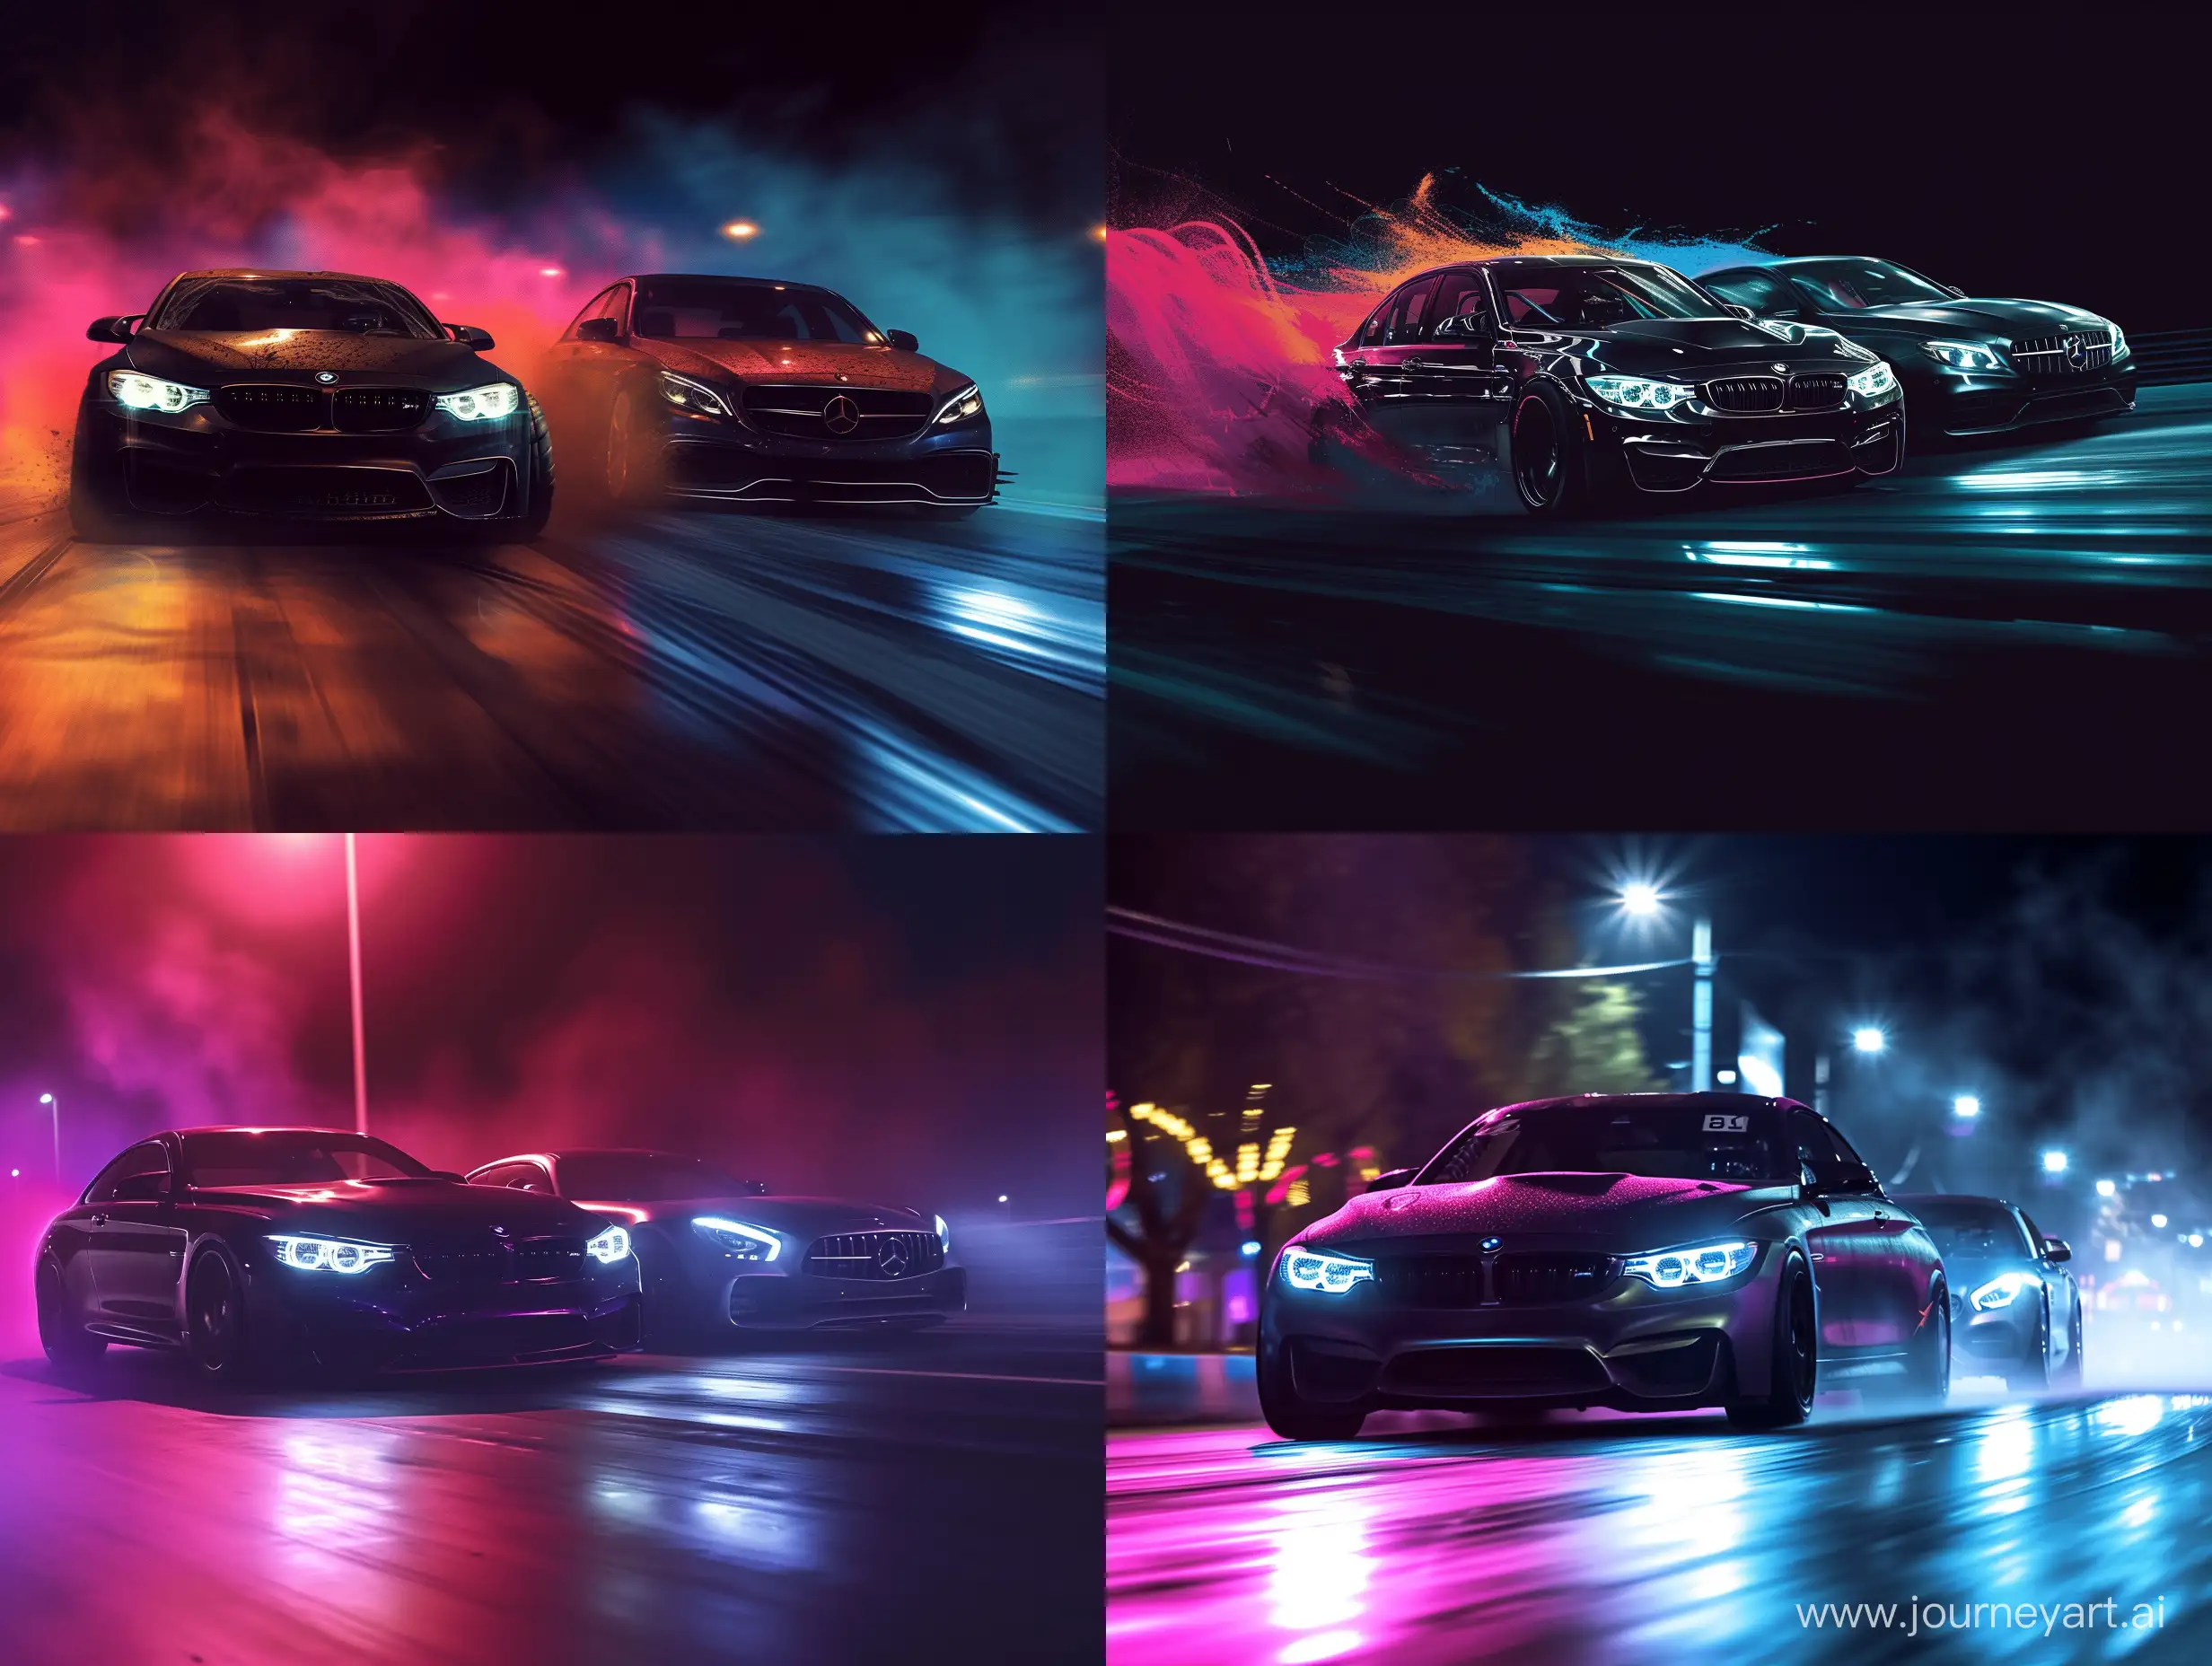 Create an image: drag racing, dark colors, BMW vs Mercedes